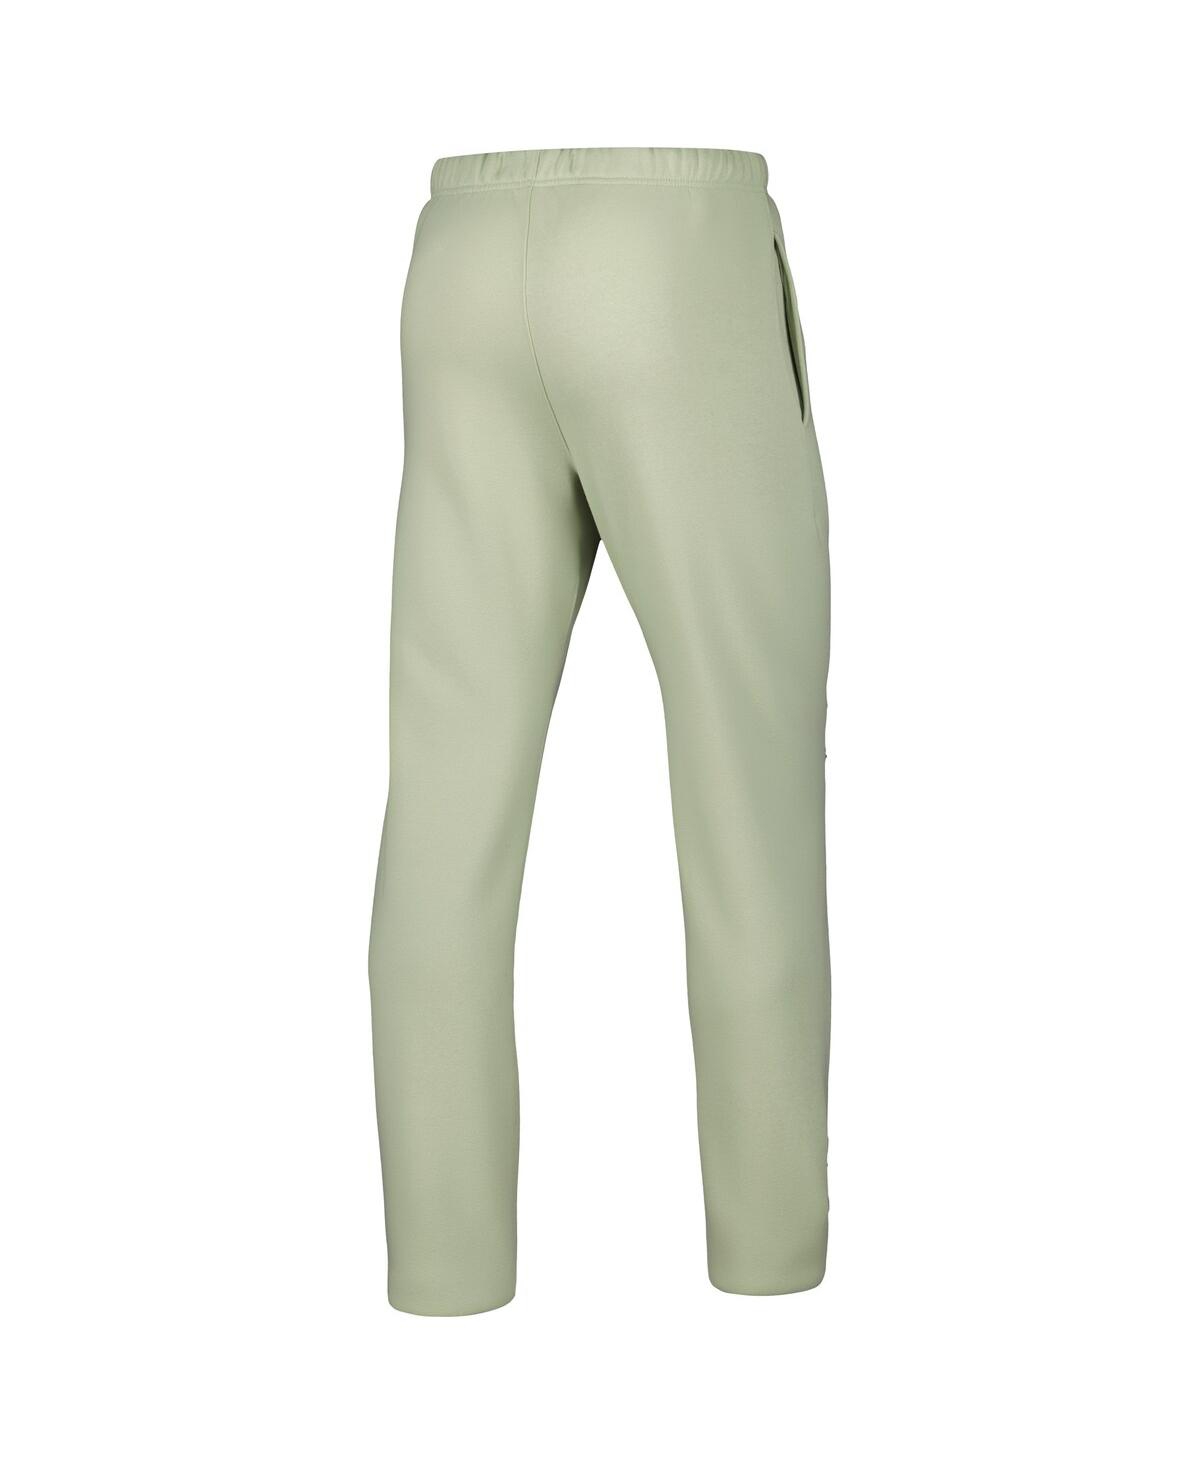 Shop Pro Standard Men's  Light Green Miami Dolphins Neutral Fleece Sweatpants